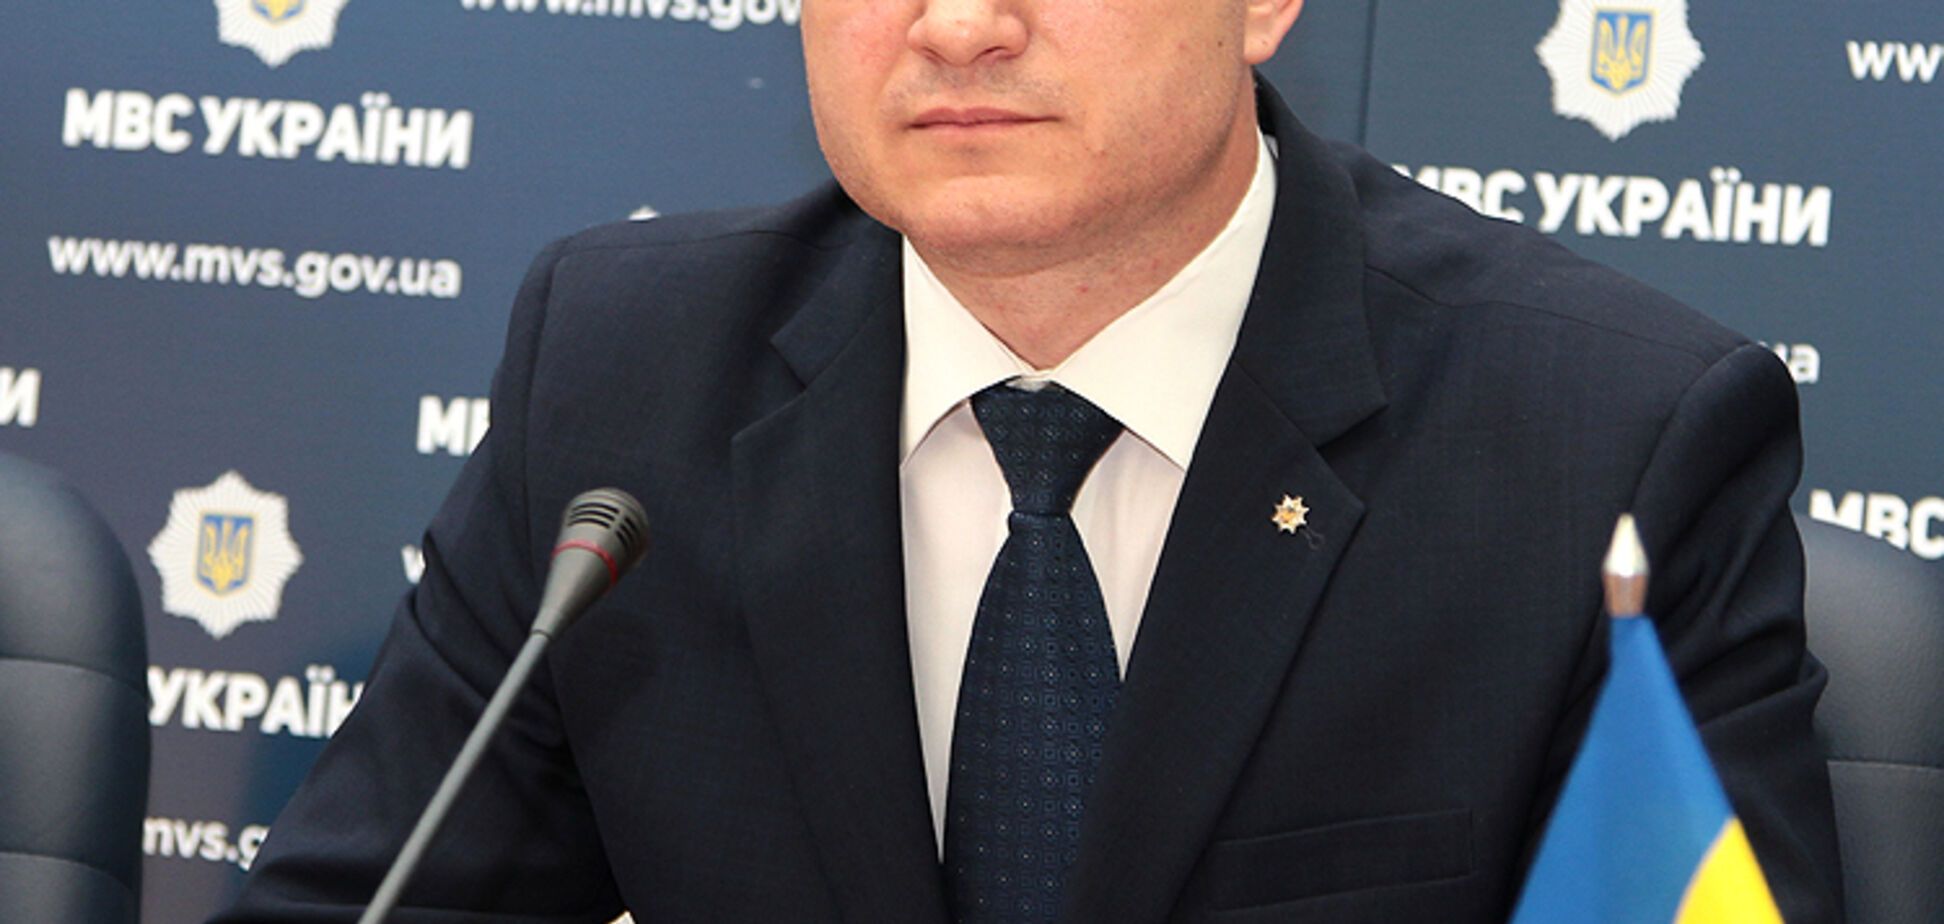  Саакашвили на свободе: в МВД объяснили свое бездействие